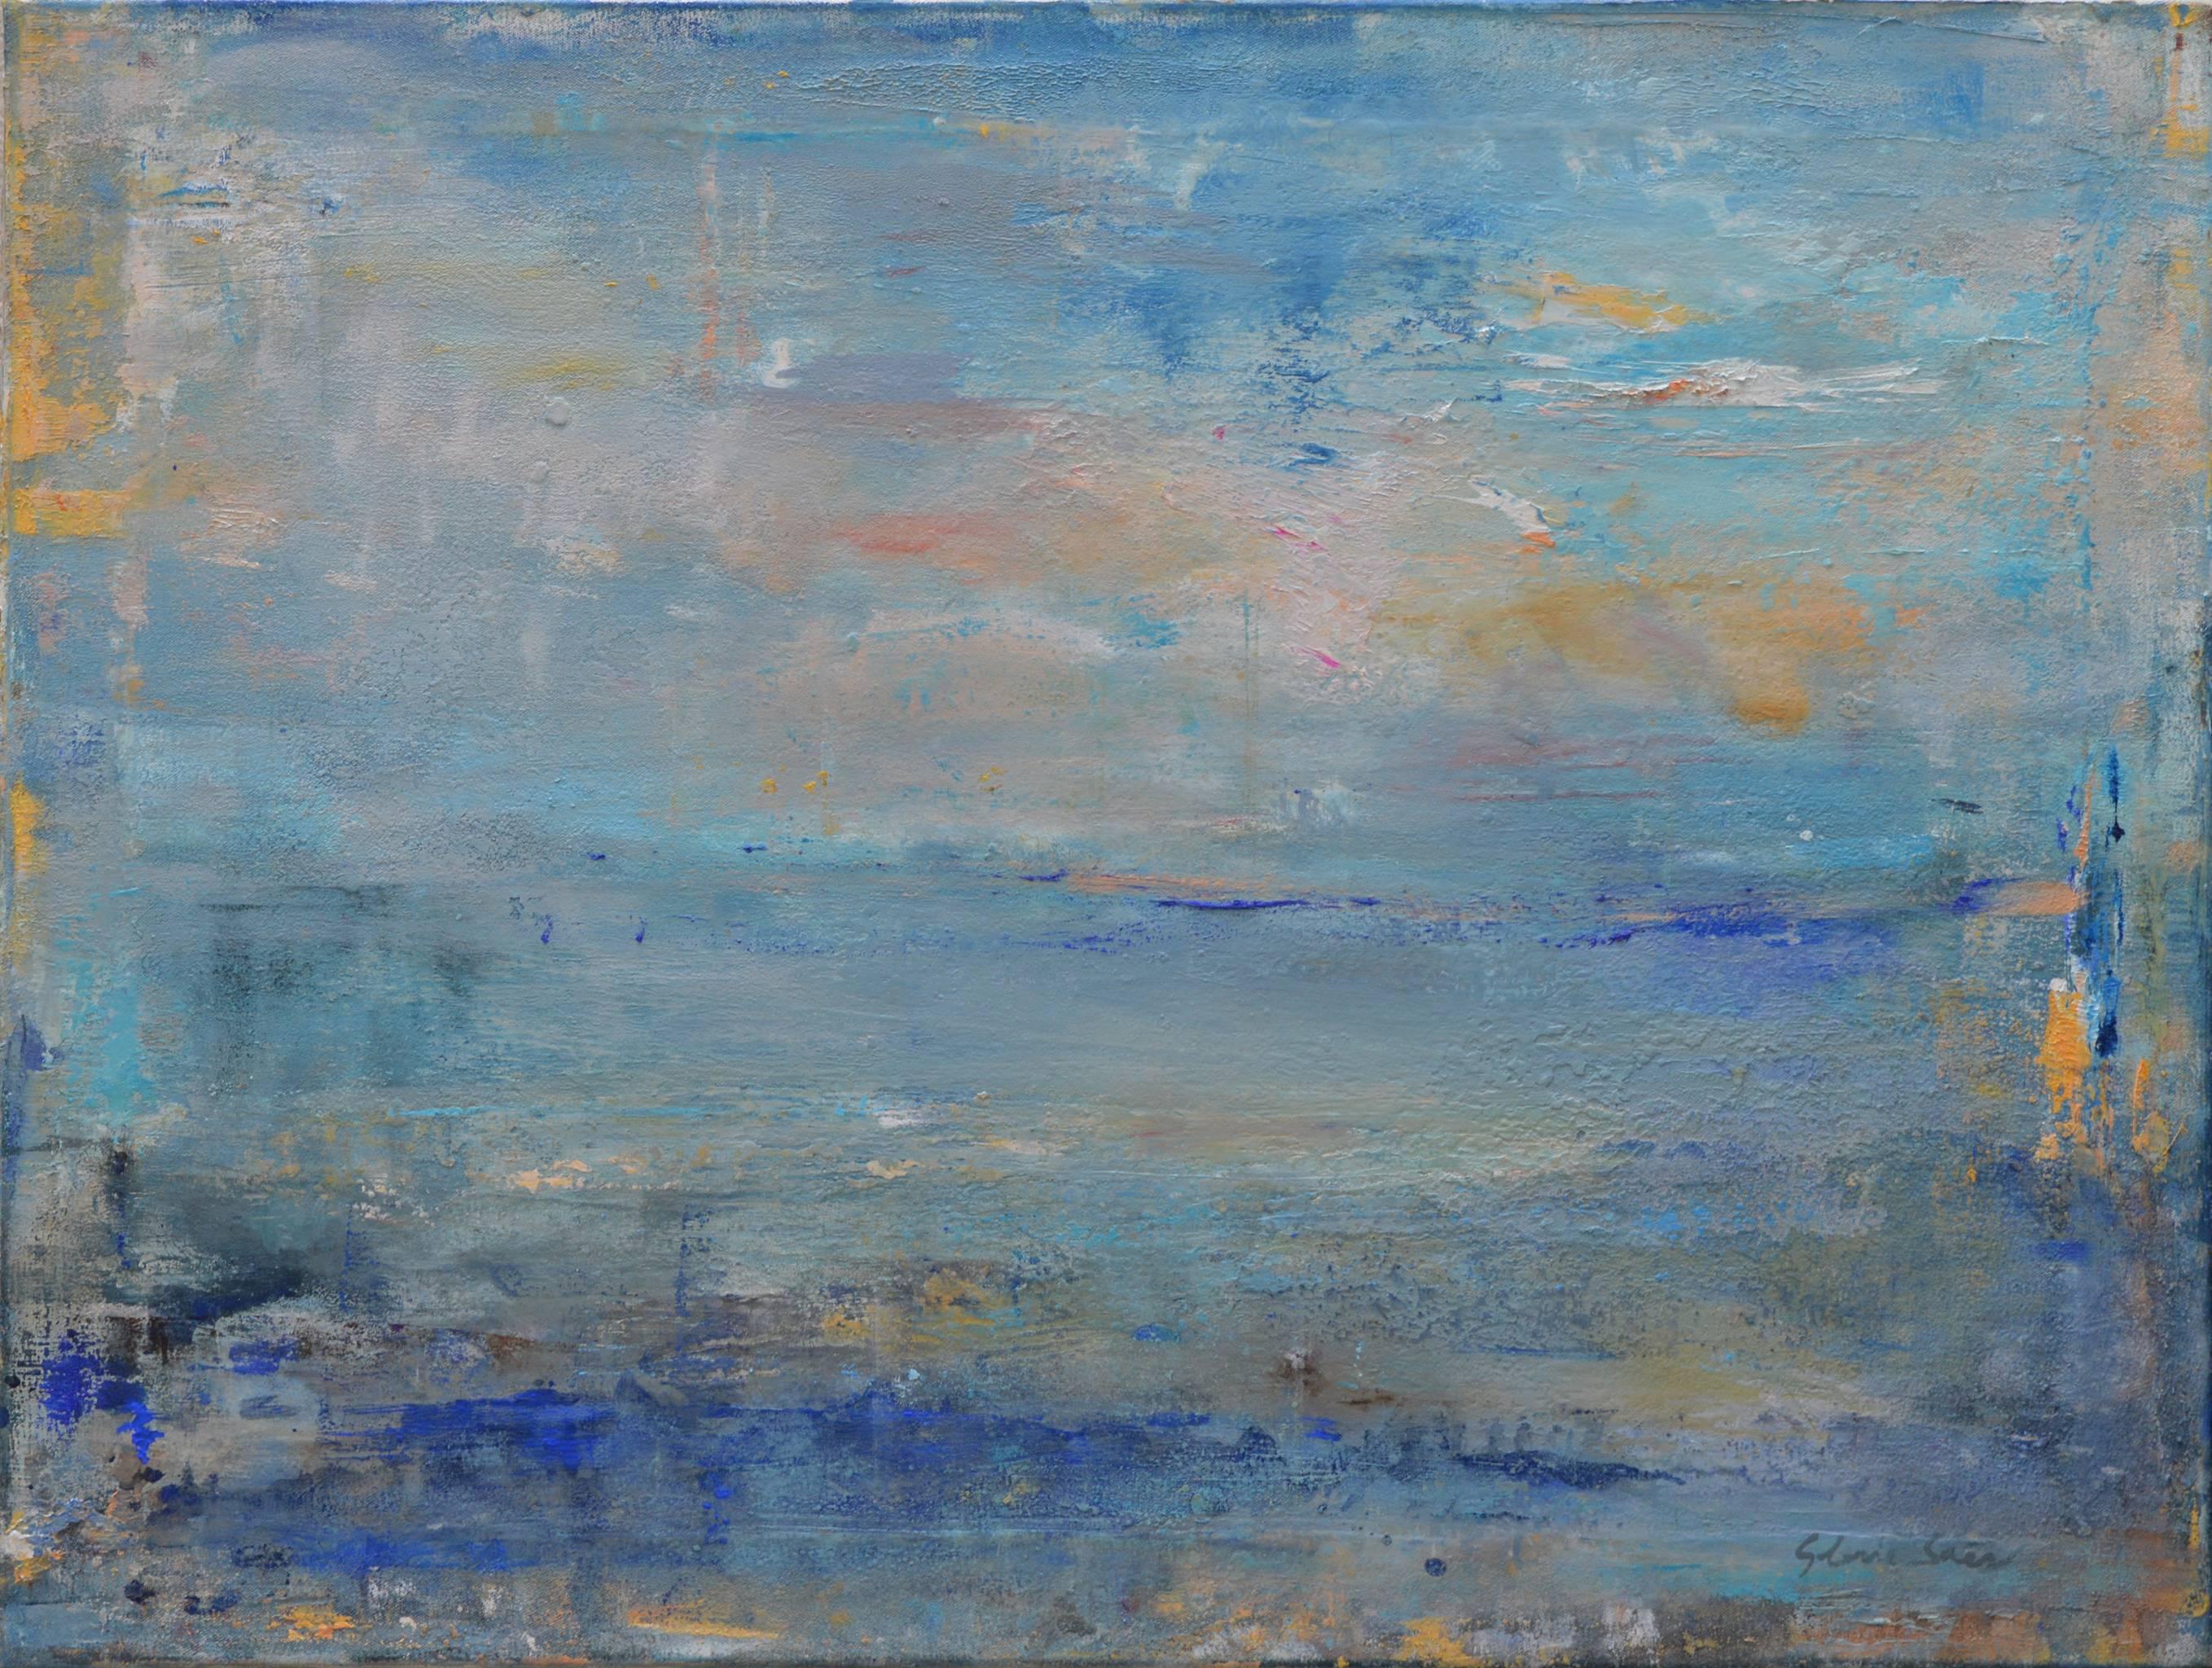 Gloria Sáez Landscape Painting - Gloria Saez, "Sea - Mar", Oil on canvas, 2017